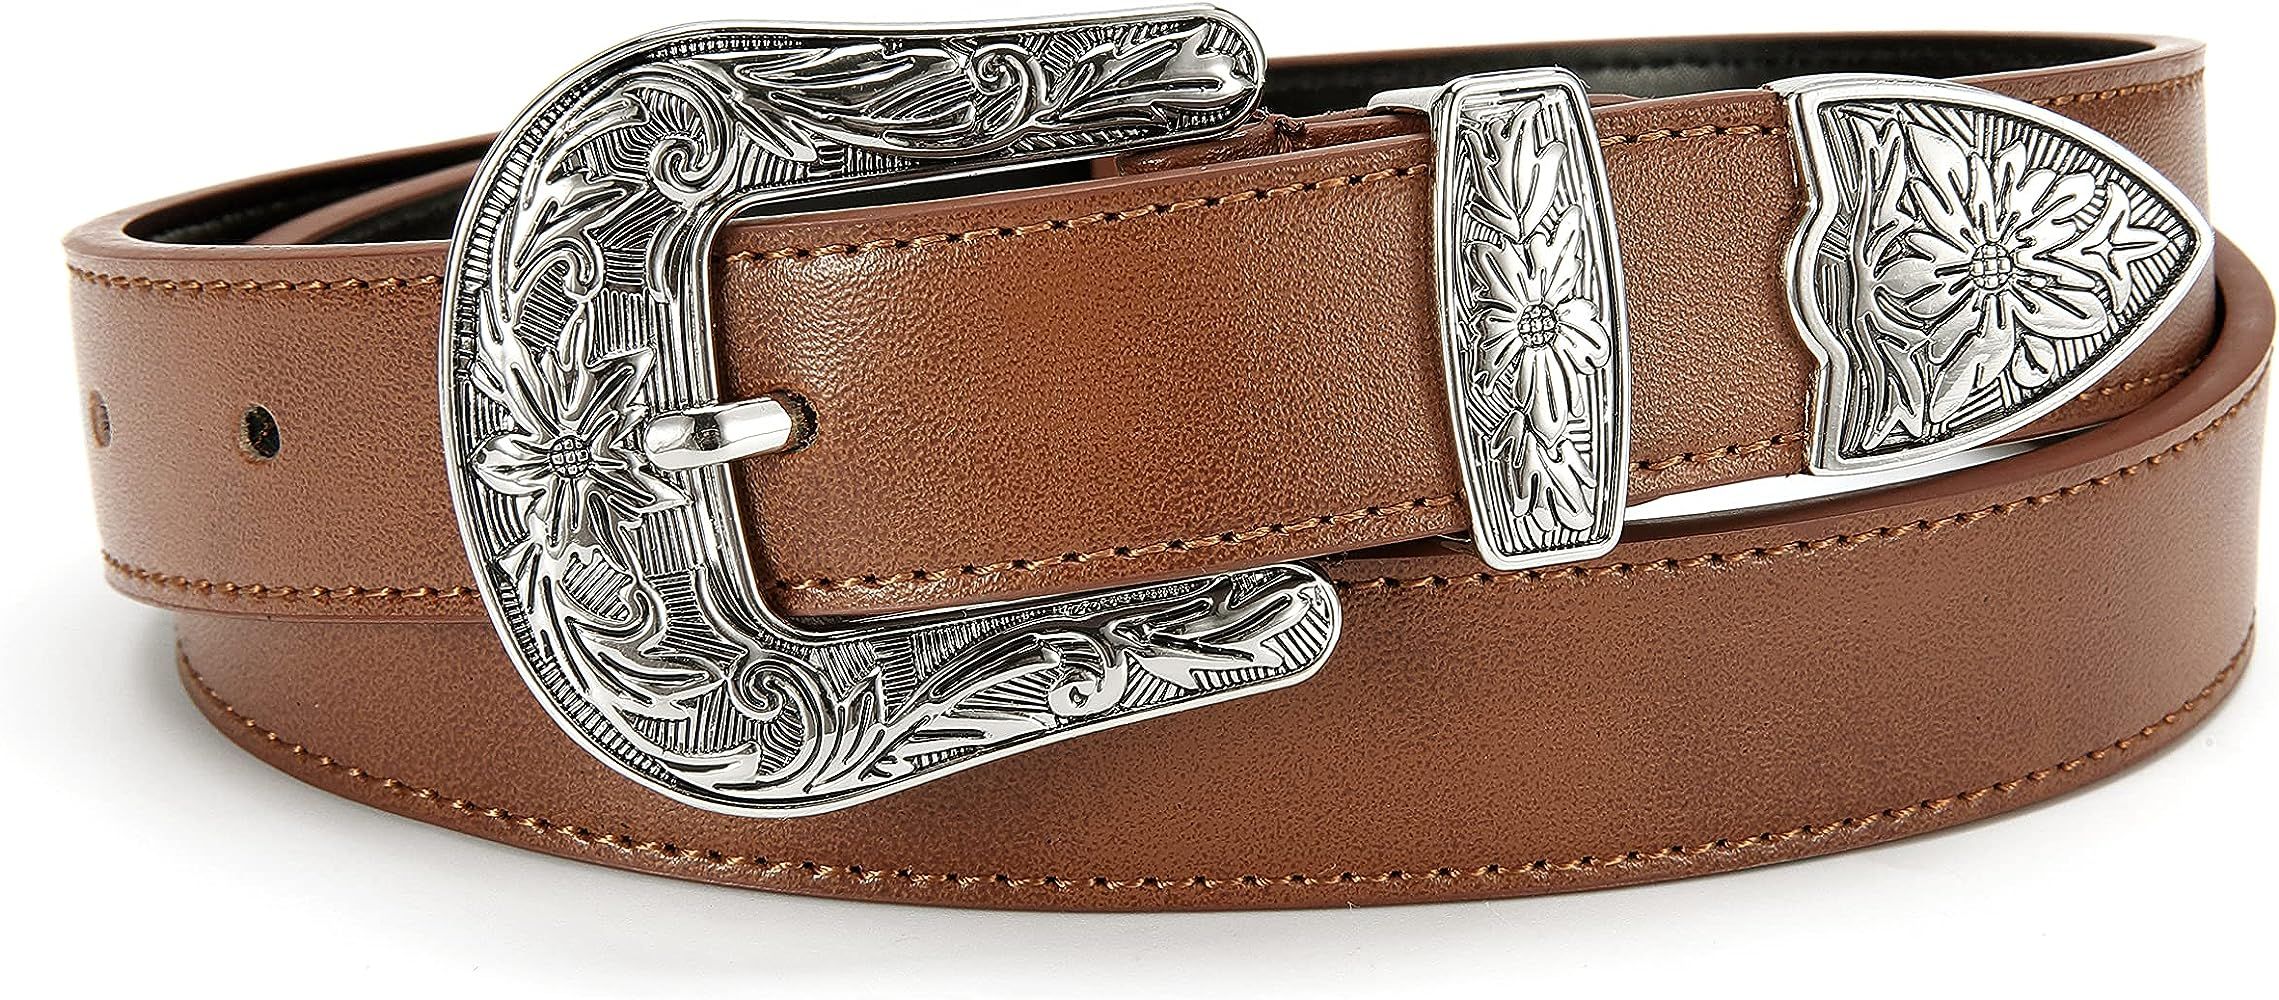 Western Belt for Women, 1.1" CR Cowboy Belt Leather Belts for Women, Country Belts for Women with... | Amazon (US)